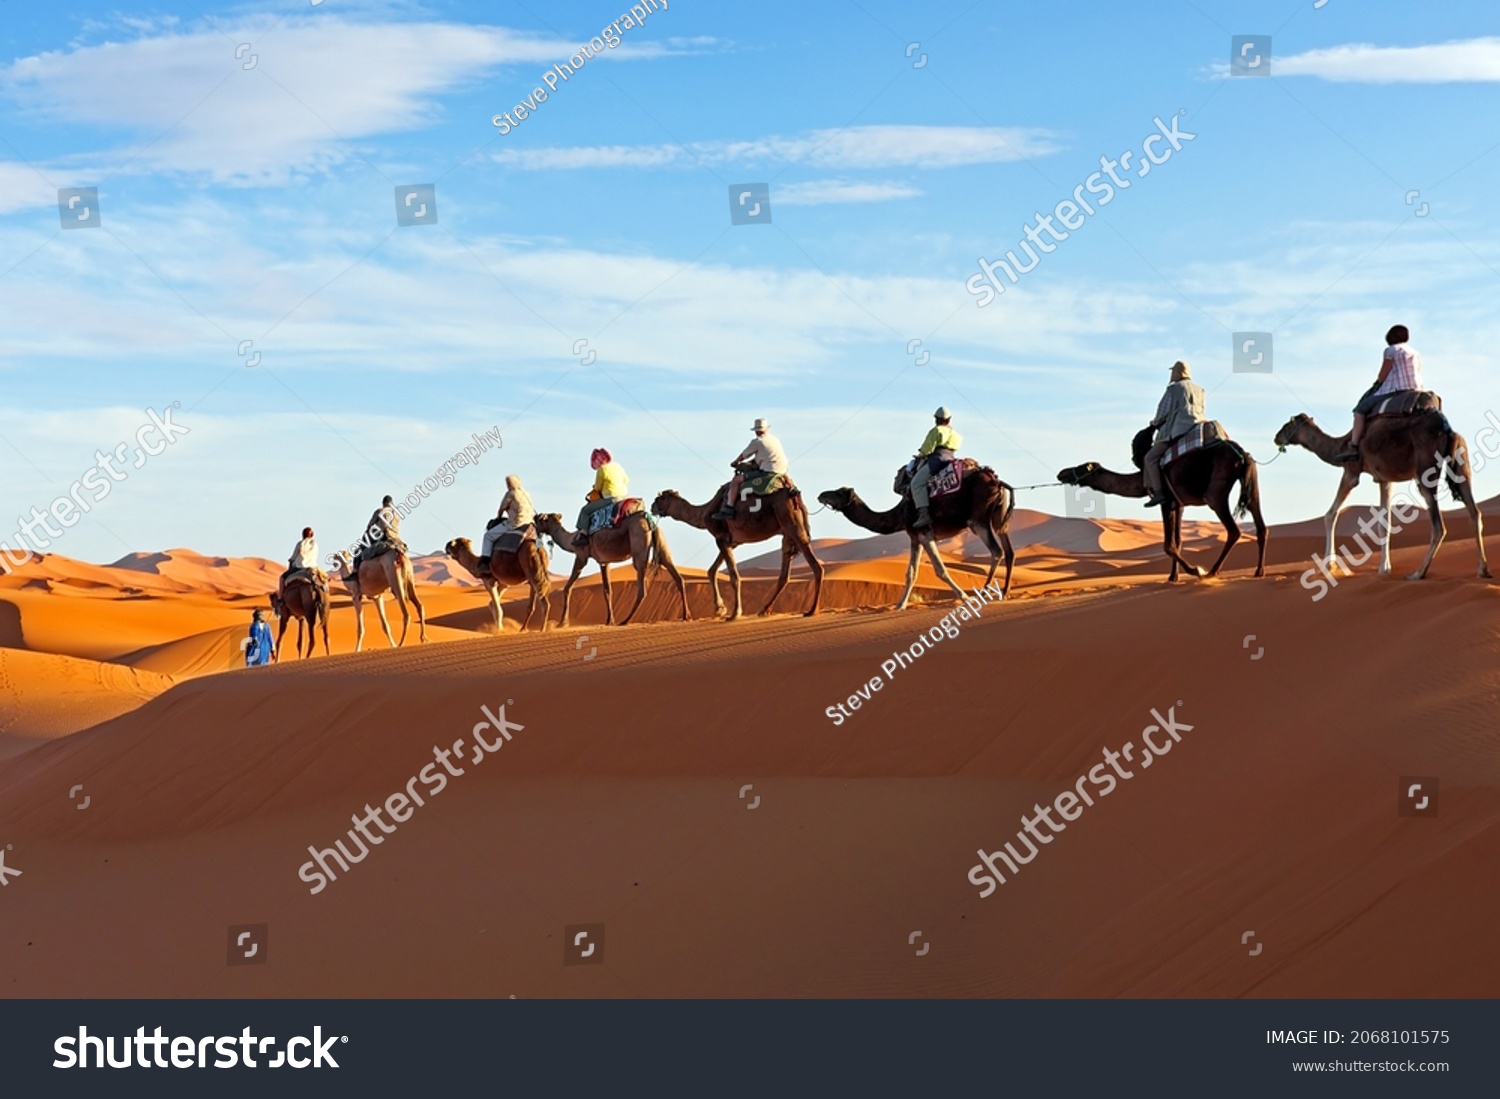 1,208 Arab man riding horse Images, Stock Photos & Vectors | Shutterstock